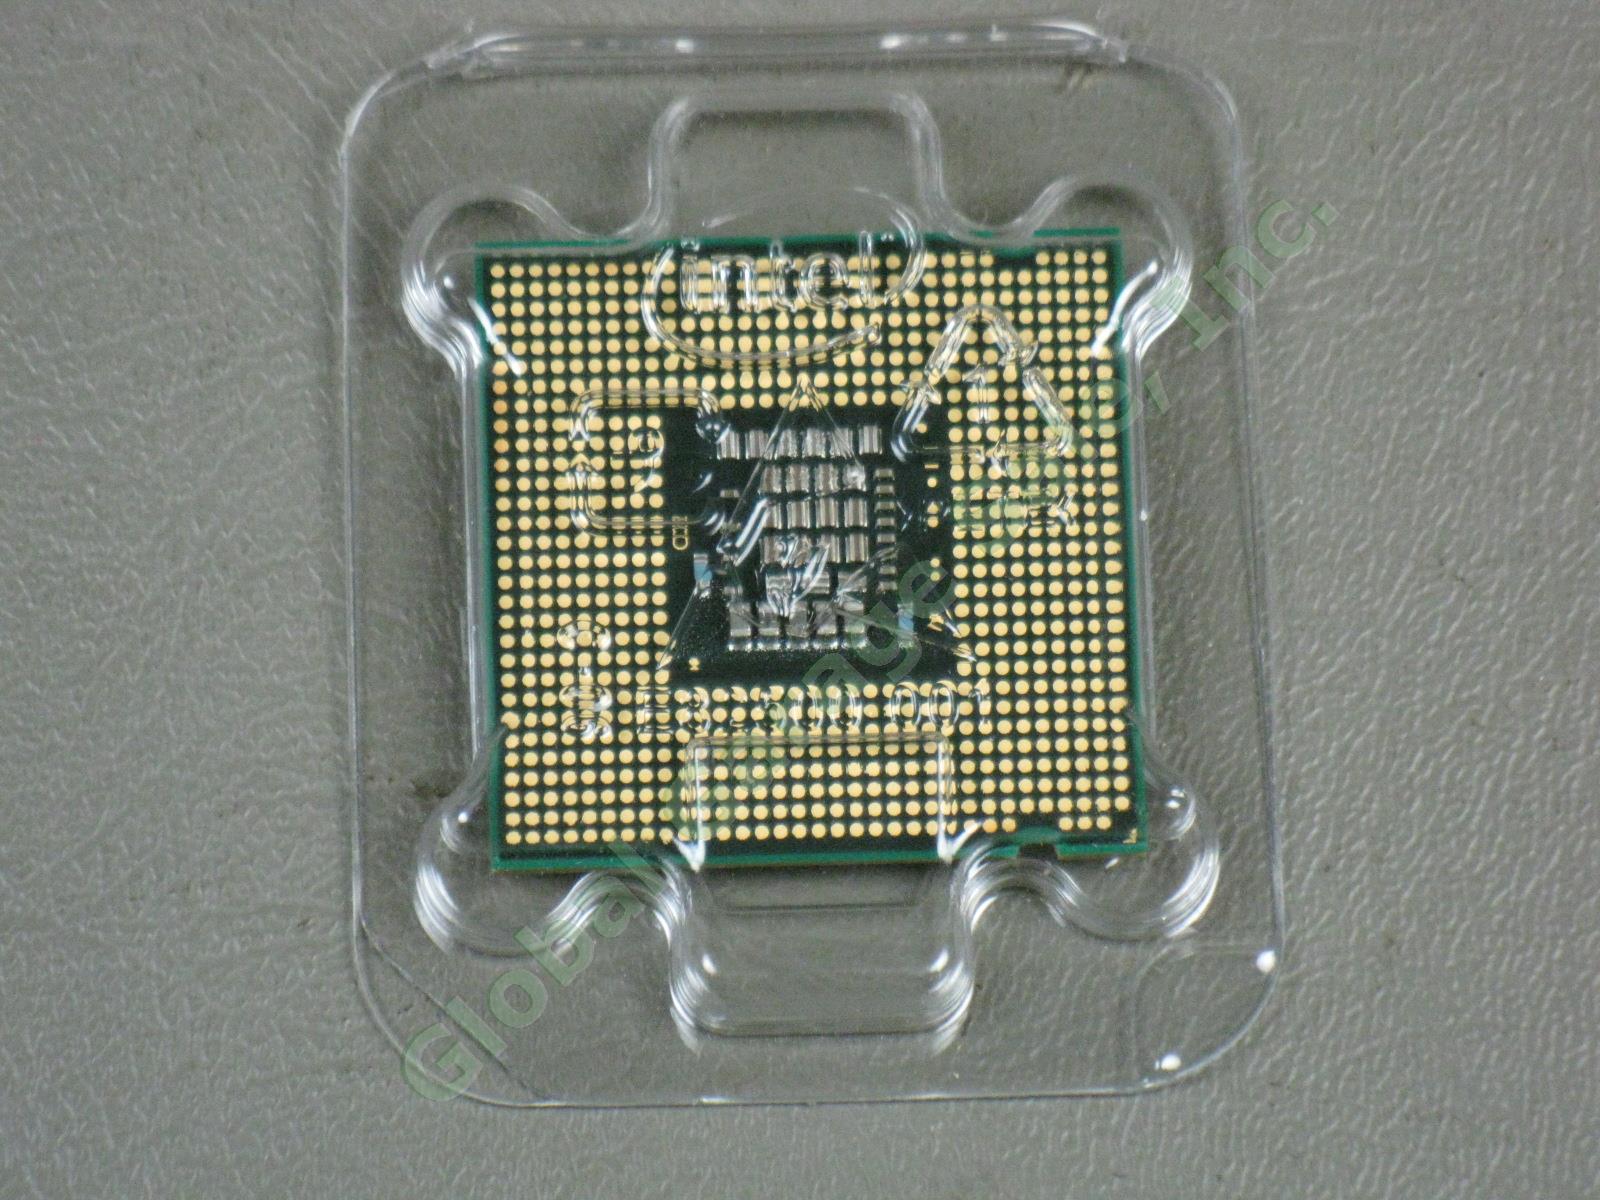 NEW Intel Core 2 Duo E8600 3.33GHz CPU Processor LGA775 Socket T + Heatsink Fan 2